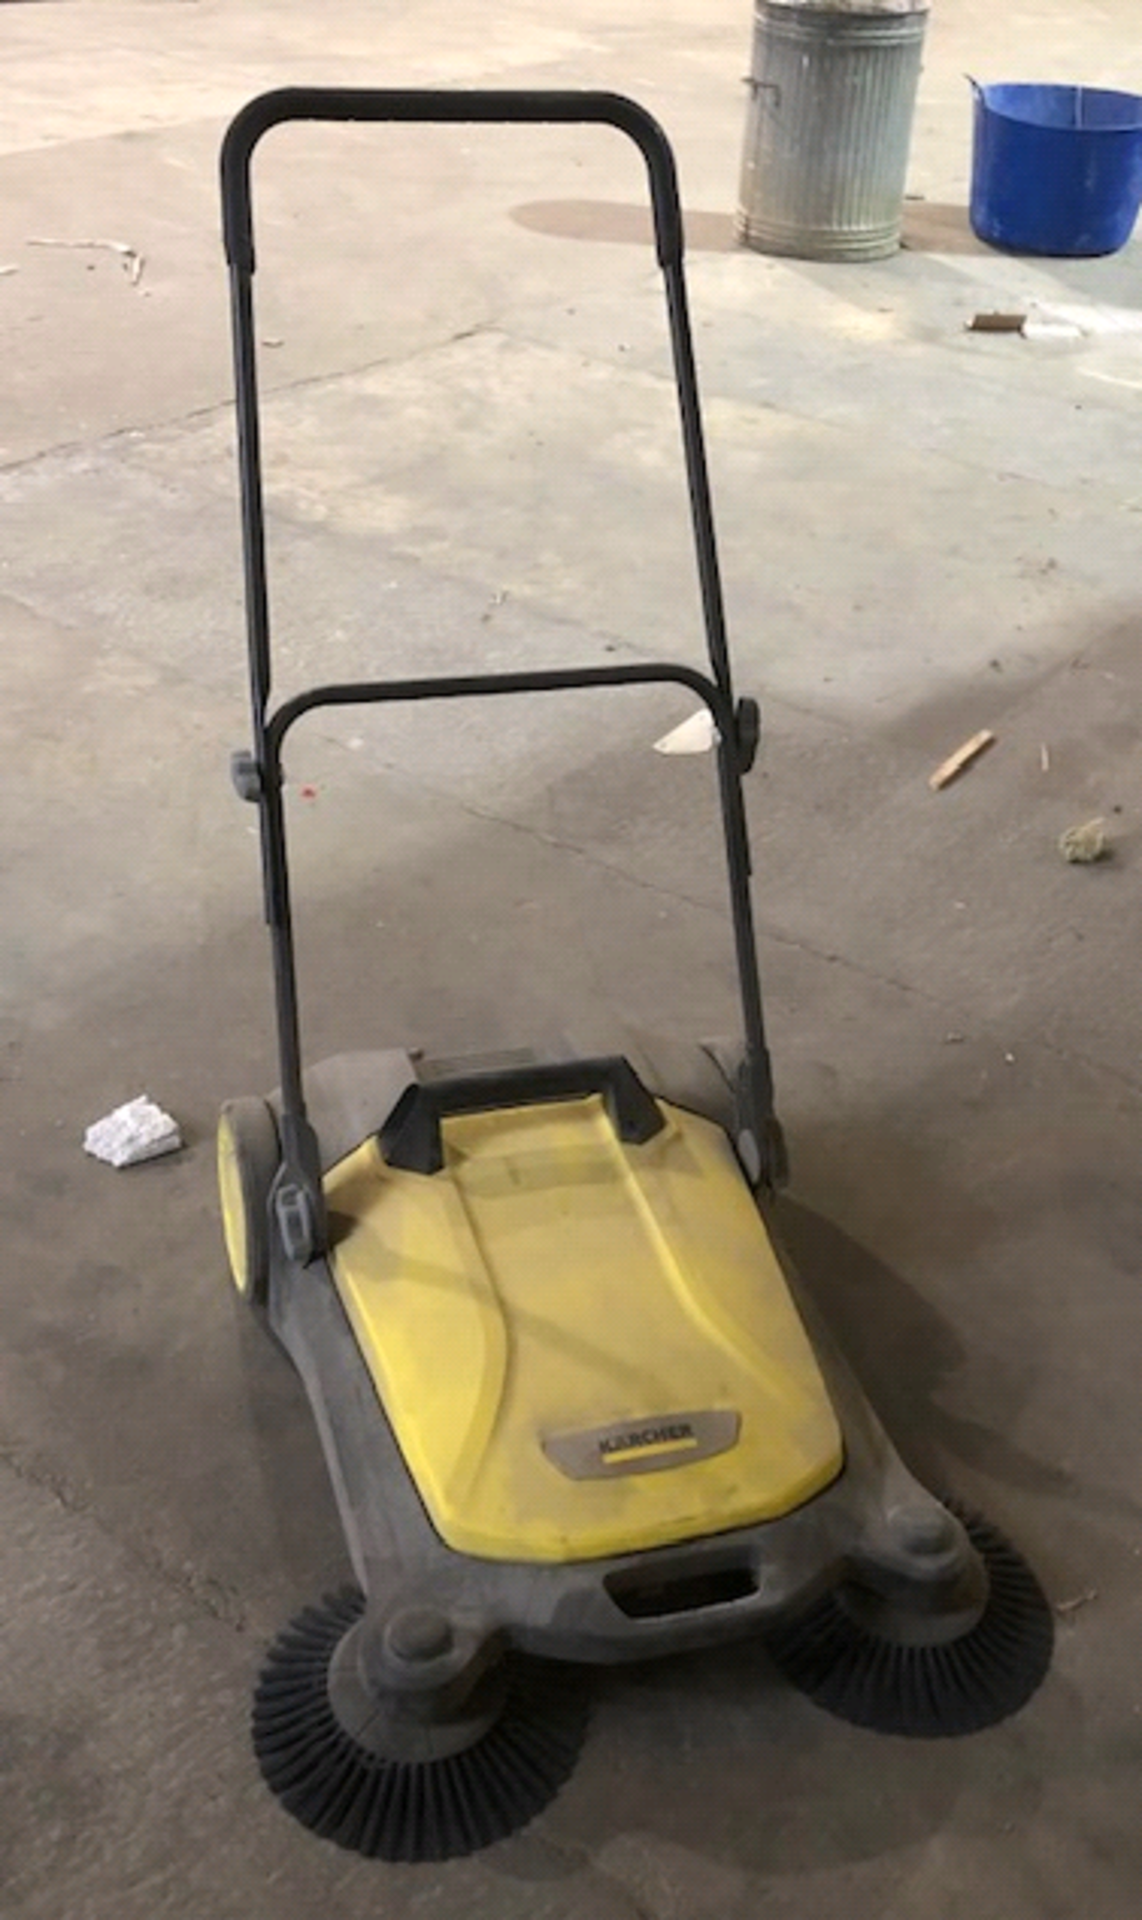 A Karcher floor sweeper